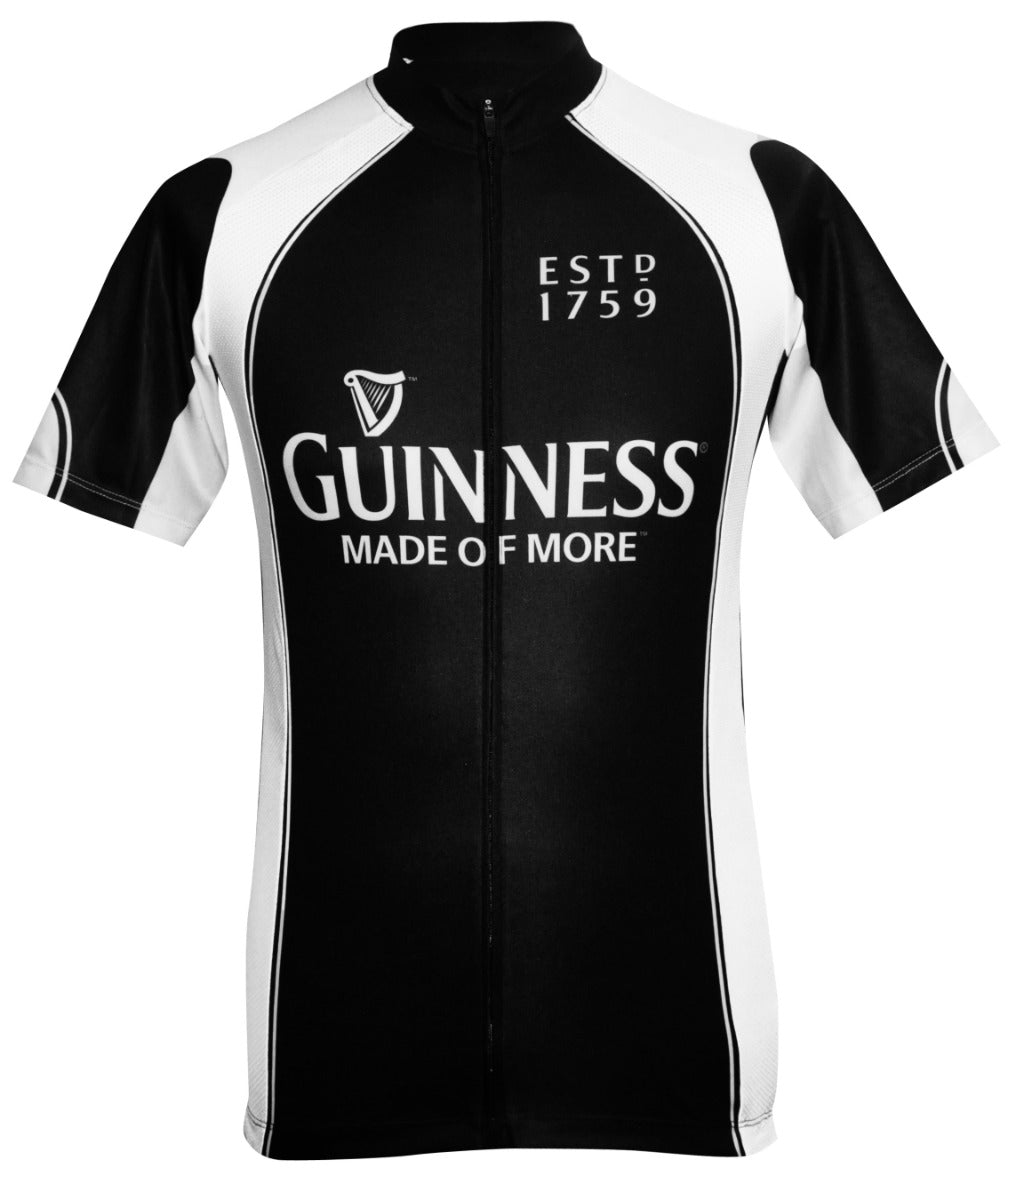 Guinness Basic Cycling Jersey